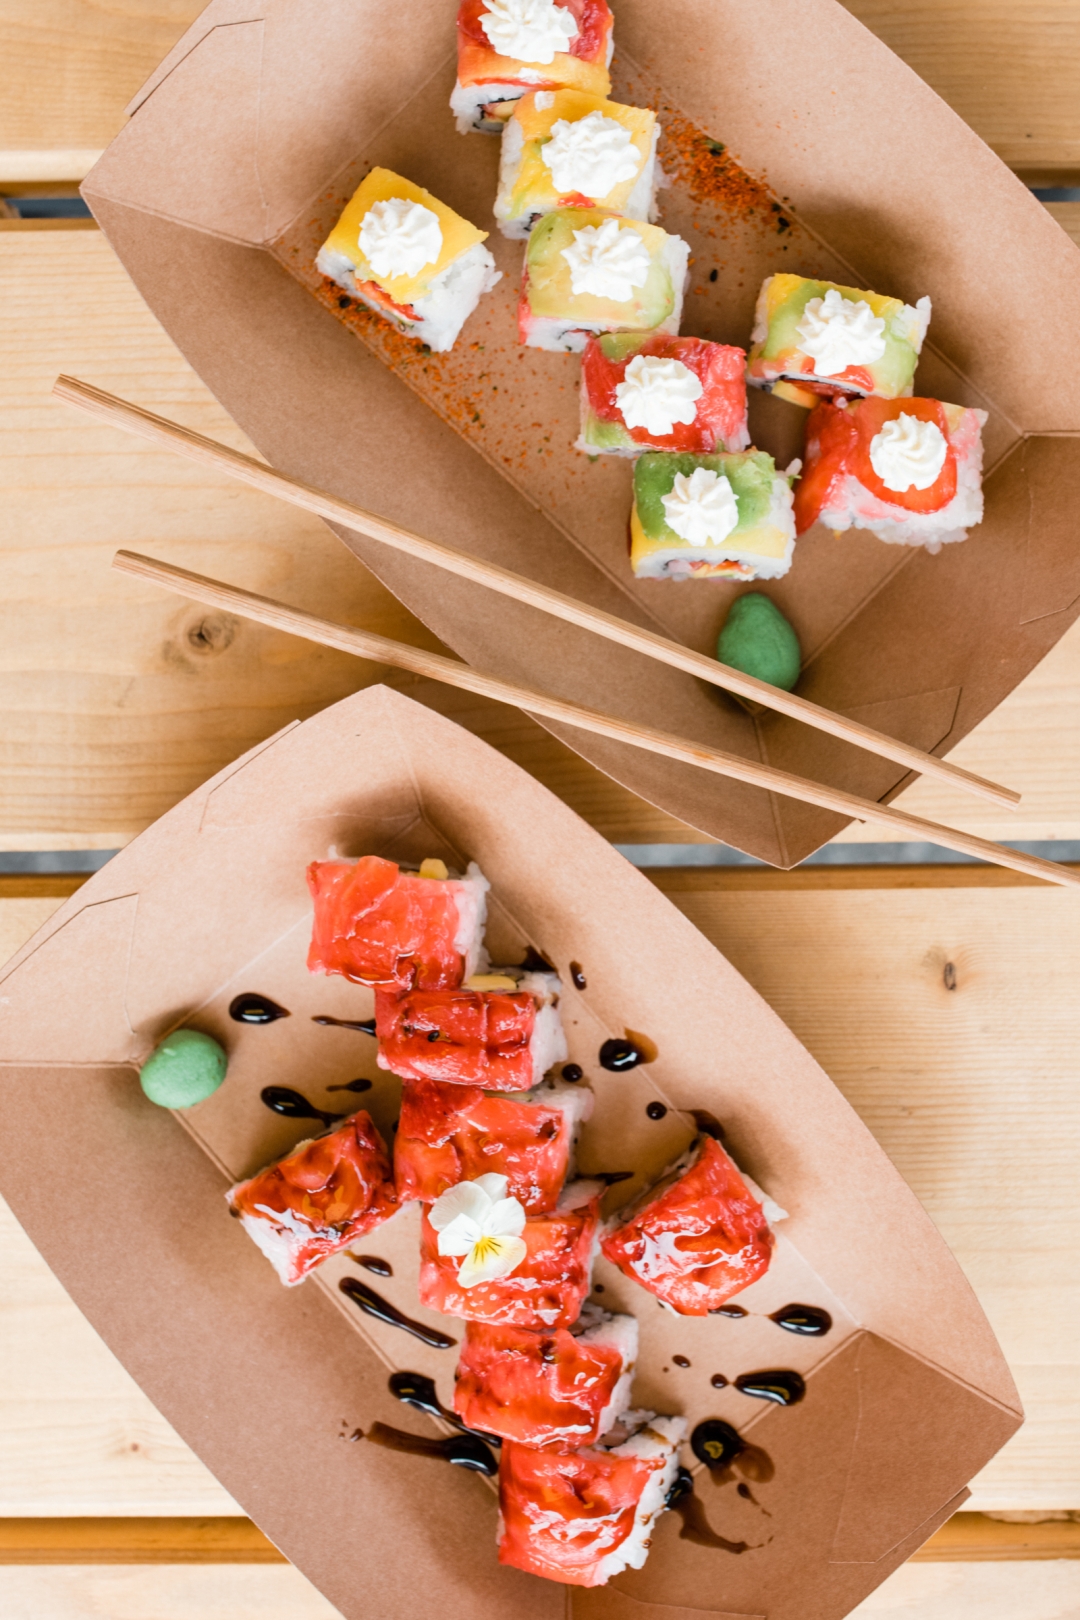 Chefovi s Asian Street Food Festivala otkrili su nam kako napraviti gyoze, sushi i katsu sendvič